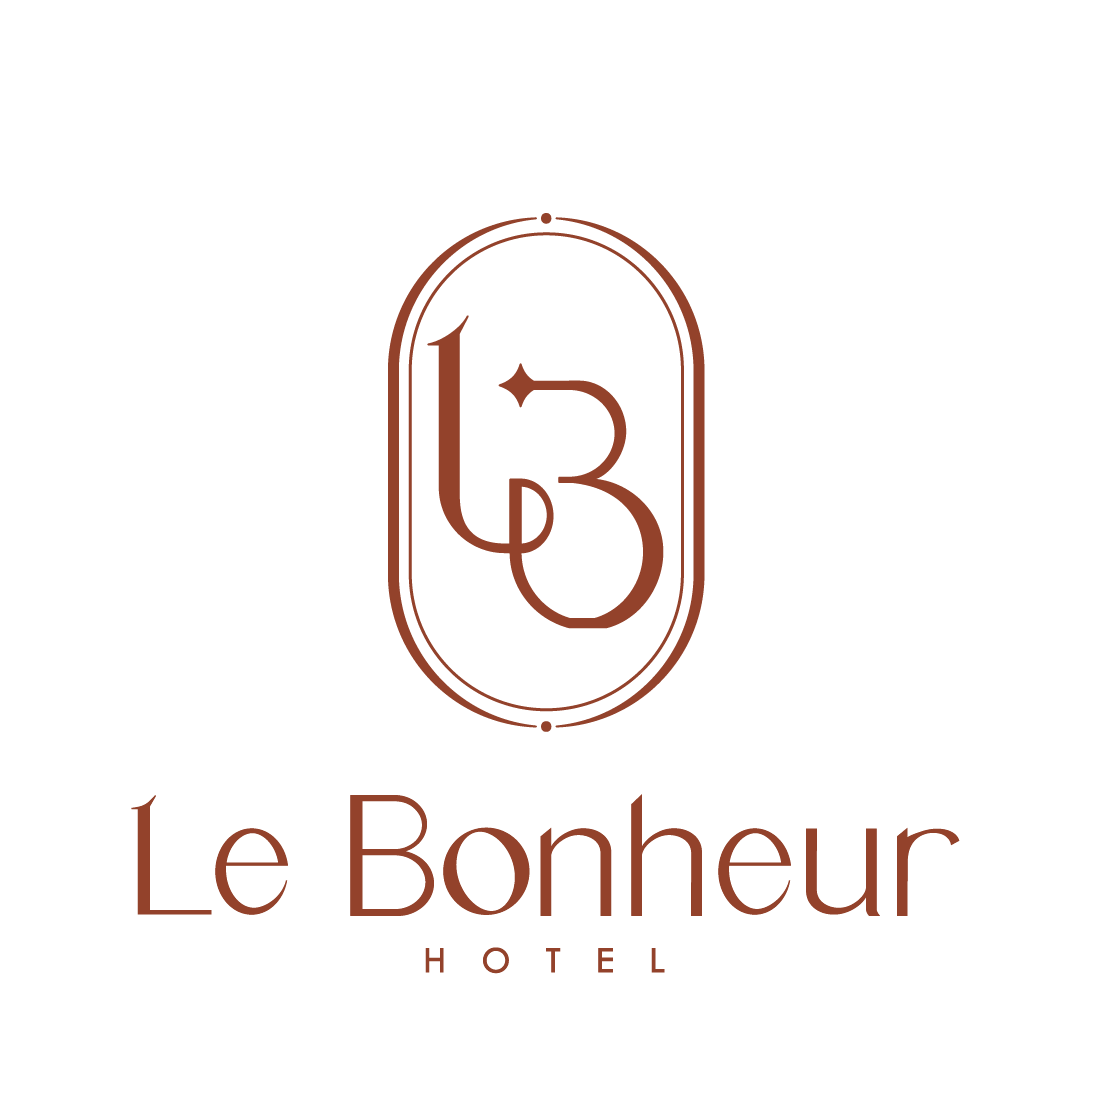 Le Bonheur Hotel